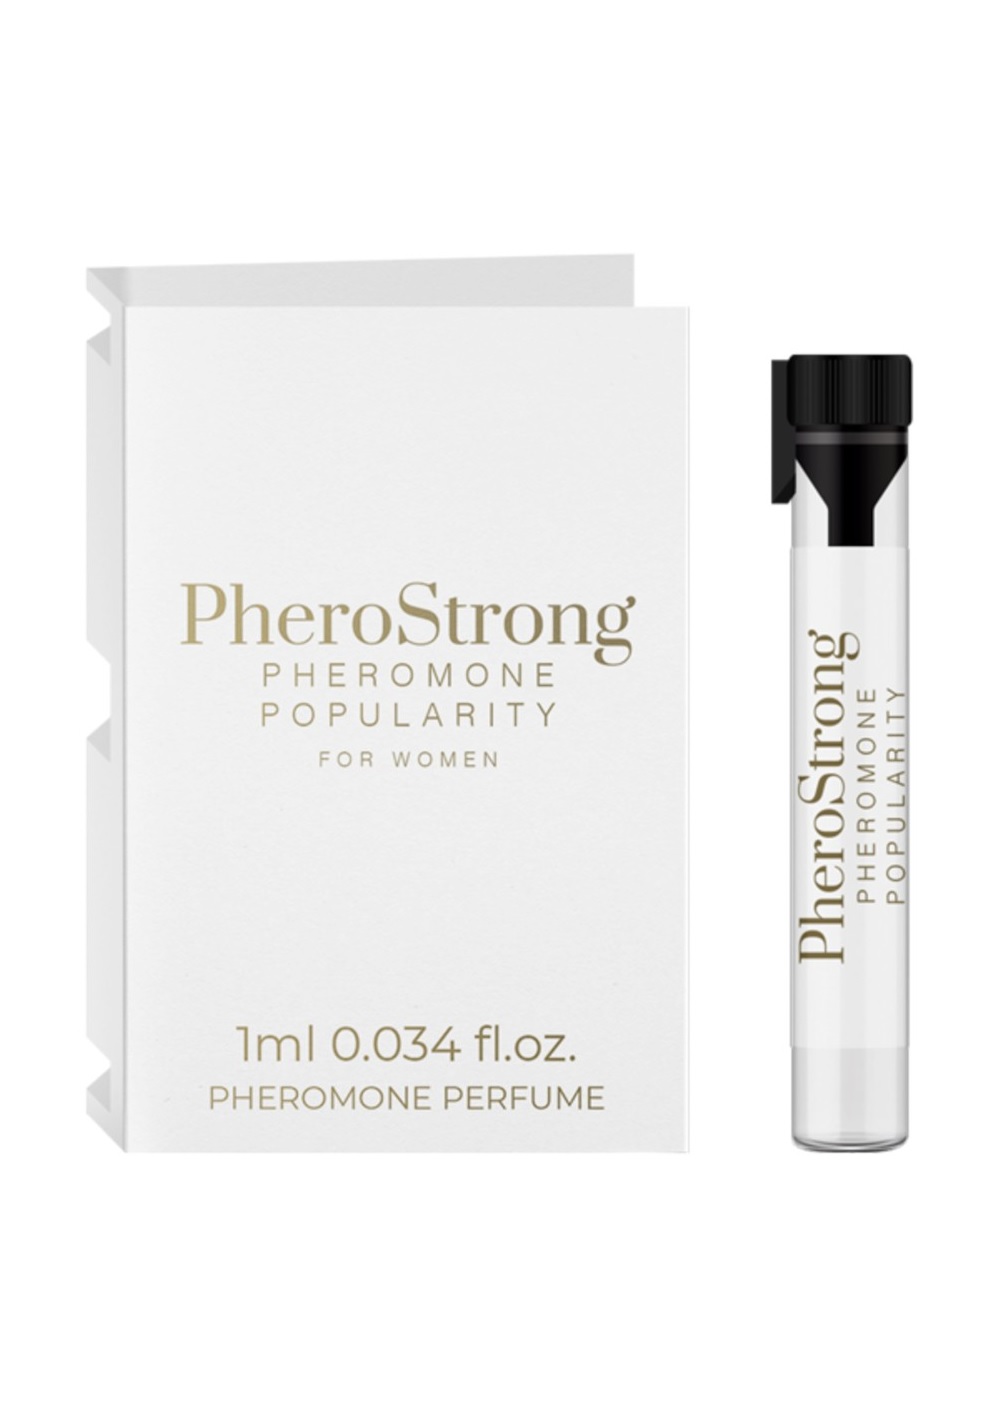 PheroStrong pheromone Popularity for Women - 1 ml.